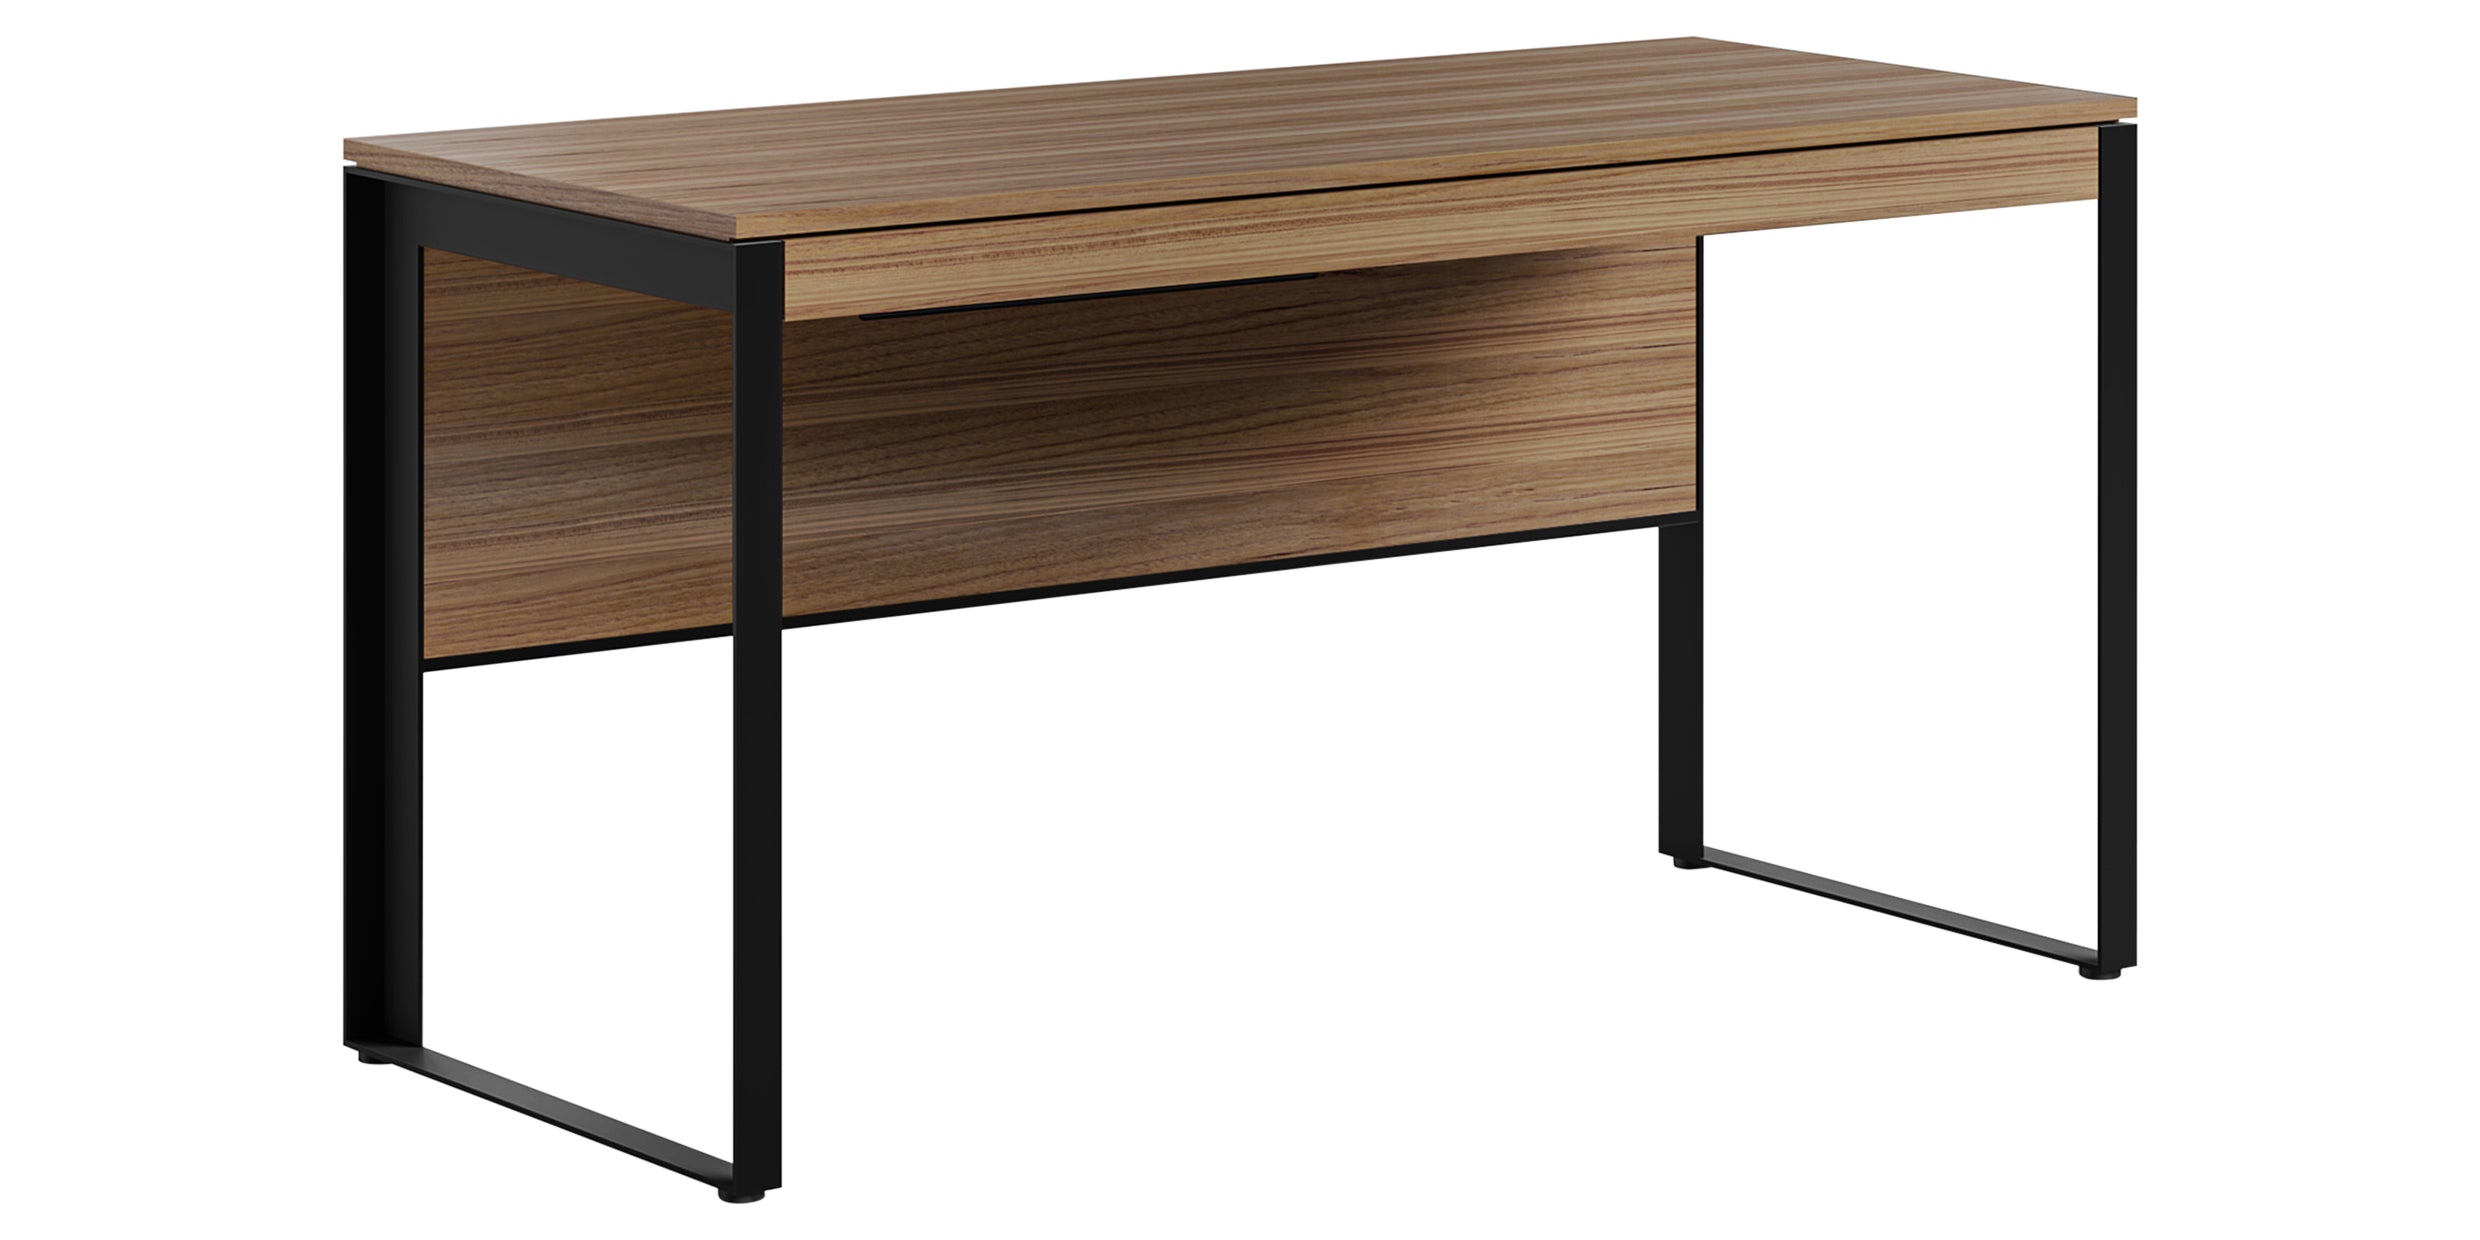 Natural Walnut Veneer & Black Steel | BDI Linea Desk | Valley Ridge Furniture